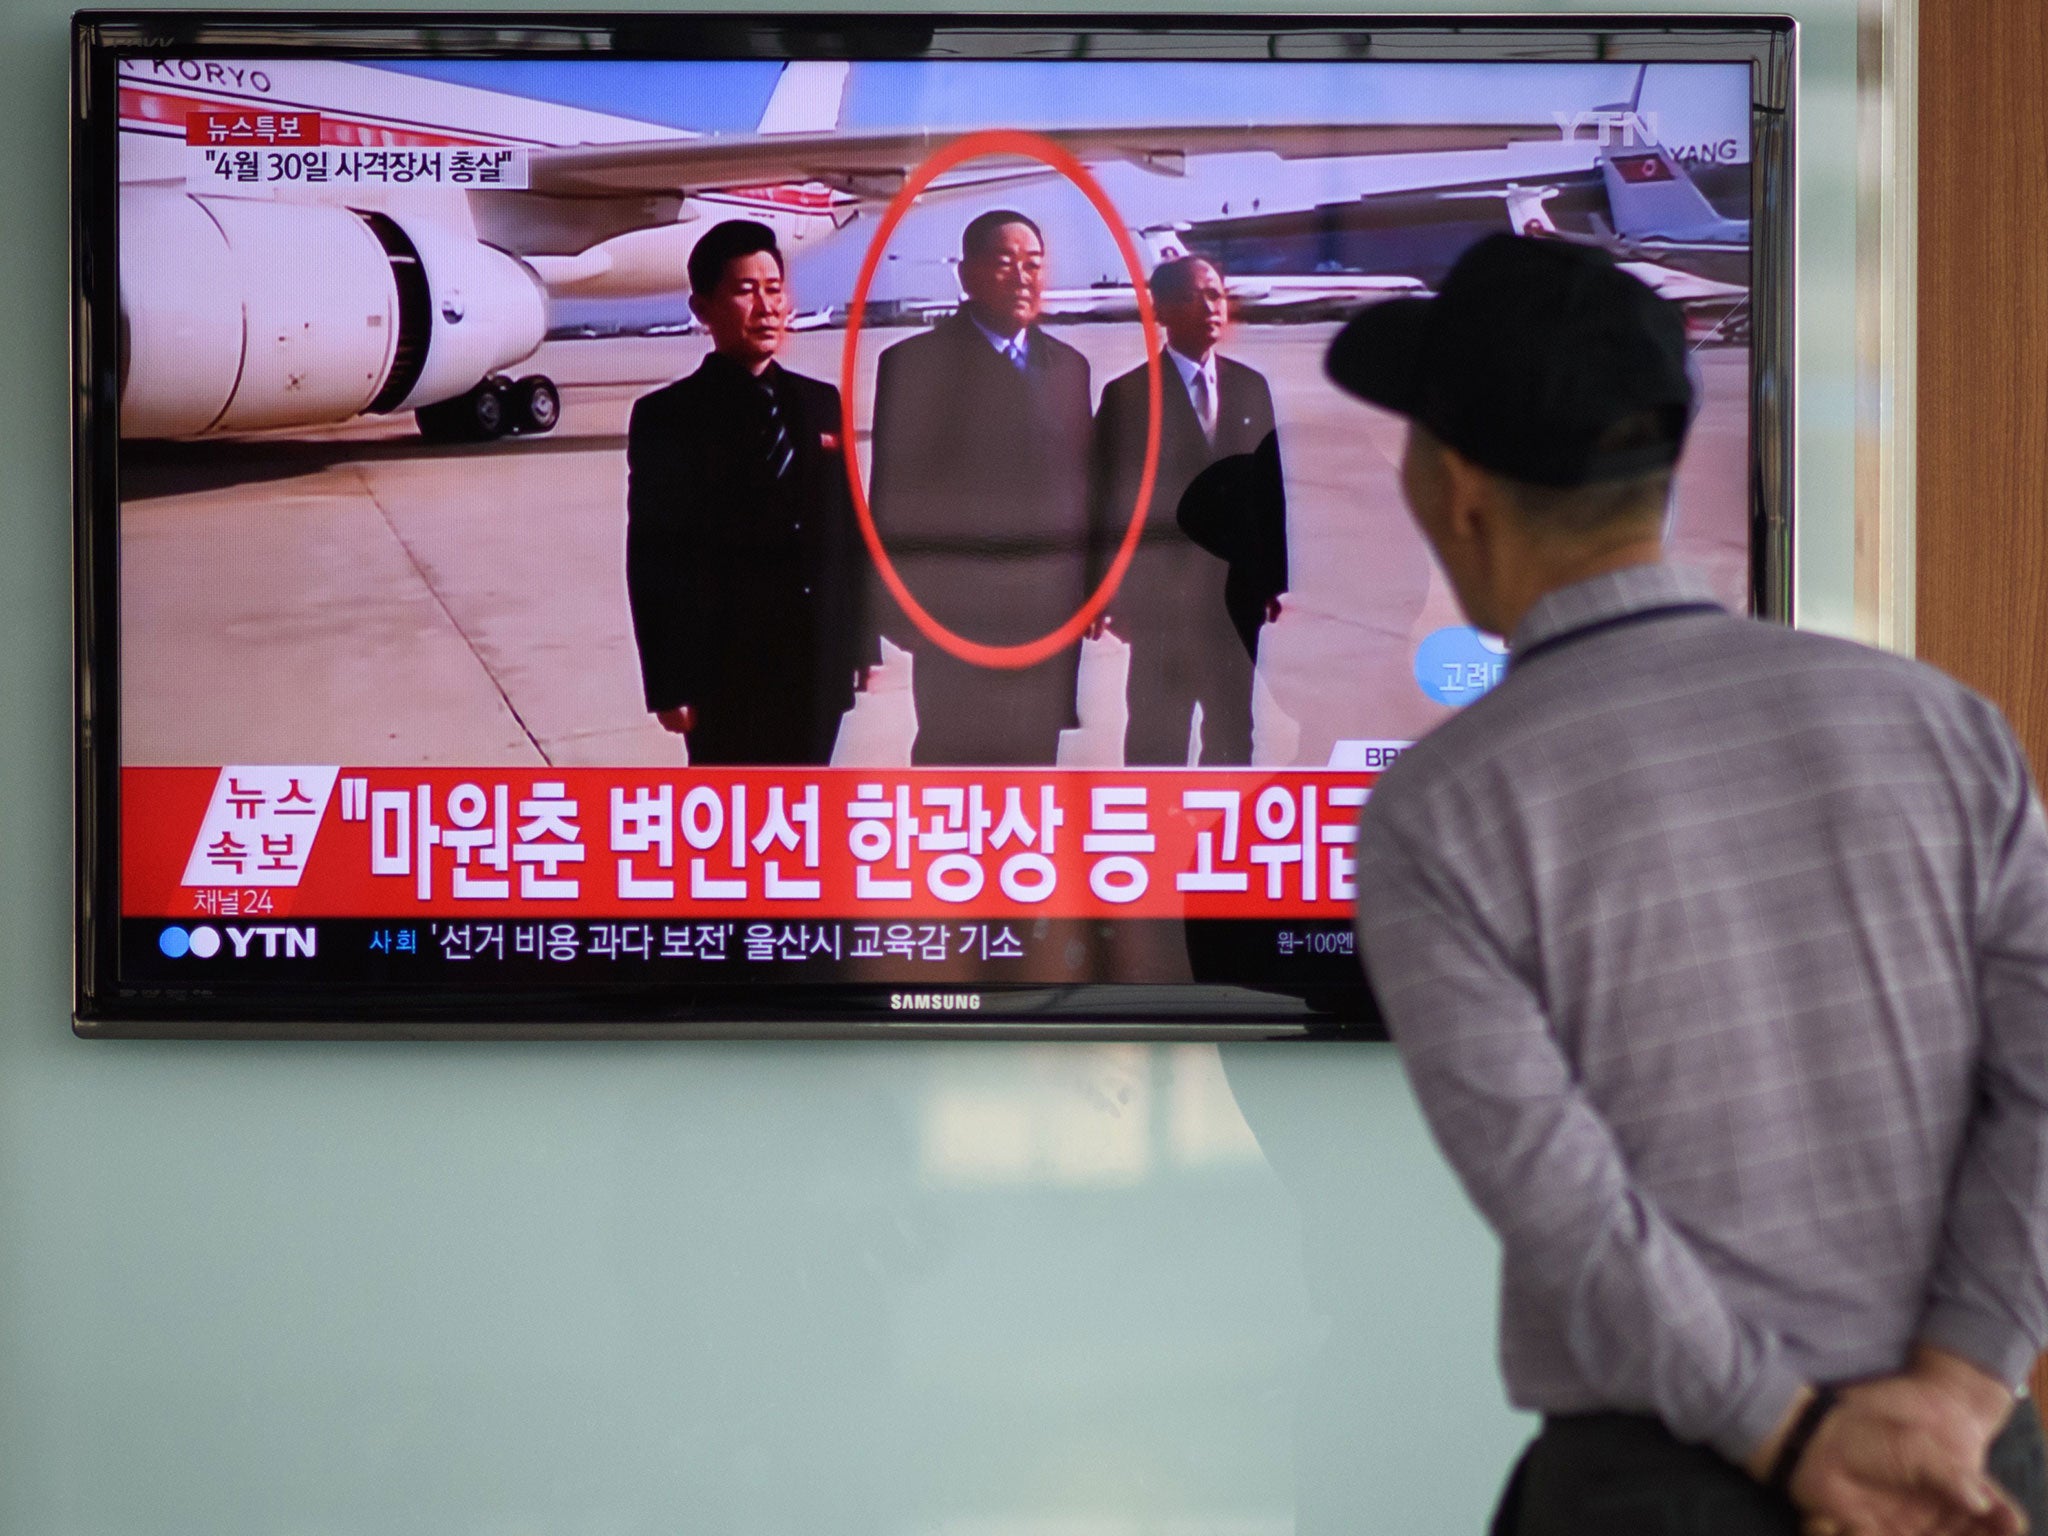 Hyon was reportedly executed using an anti-aircraft gun